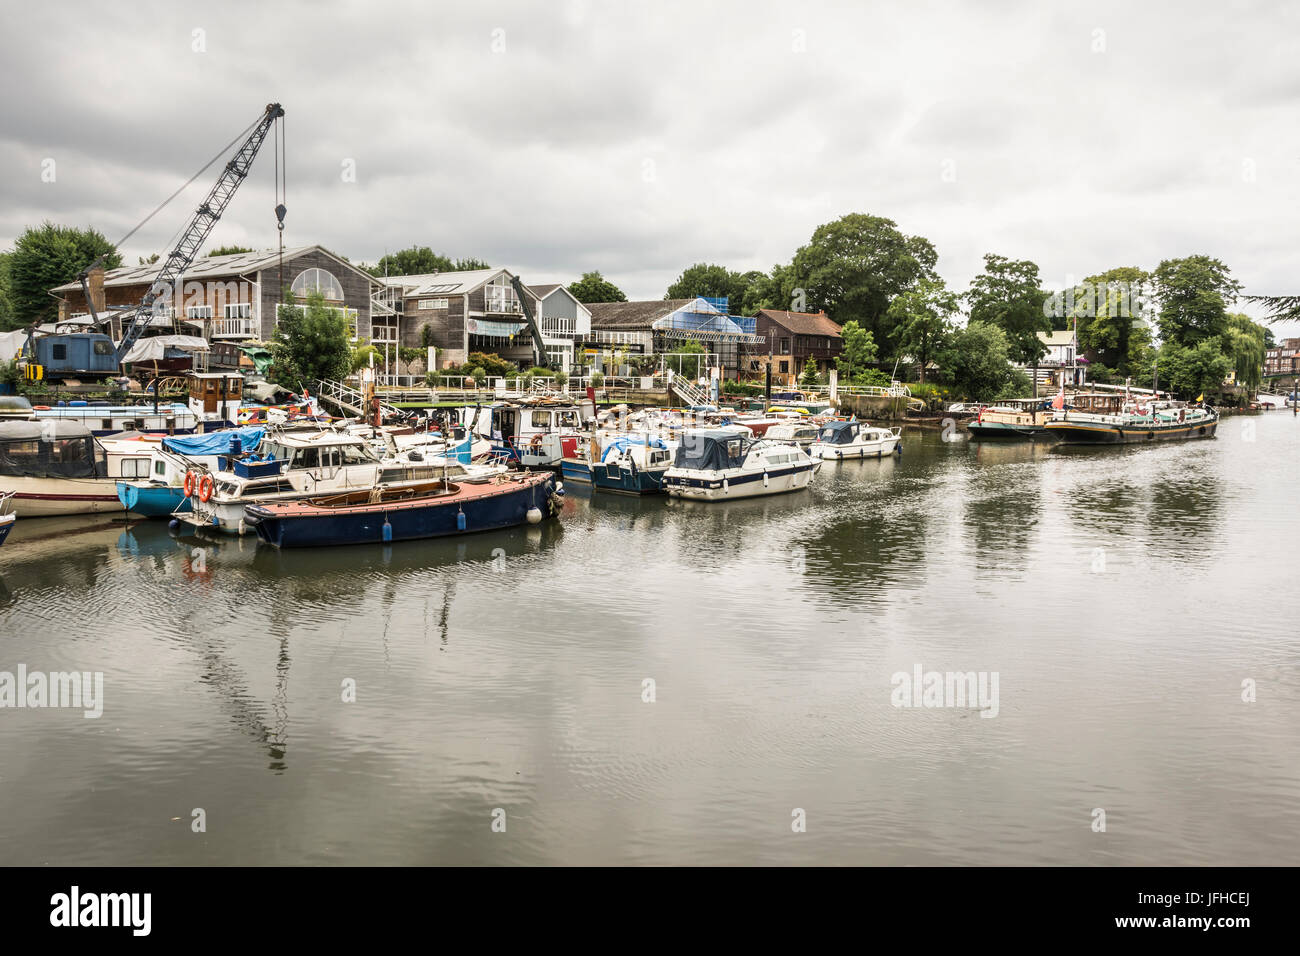 View of the River Thames at Eel Pie island, Twickenham, London UK Stock Photo